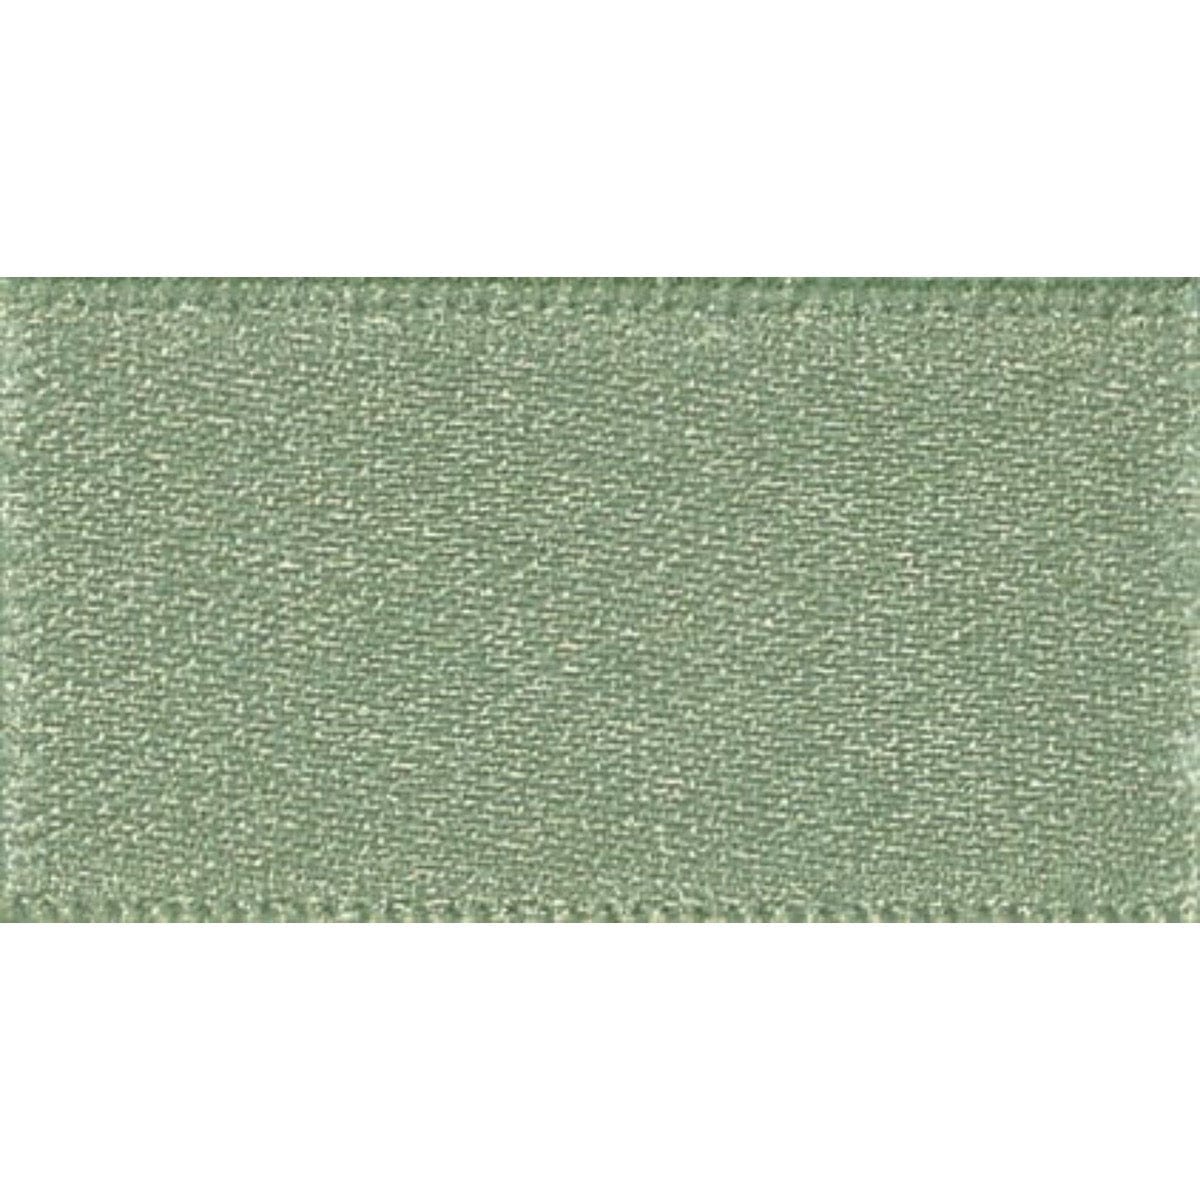 Double Faced Satin Ribbon Khaki Green: 3mm Wide. Price per metre.